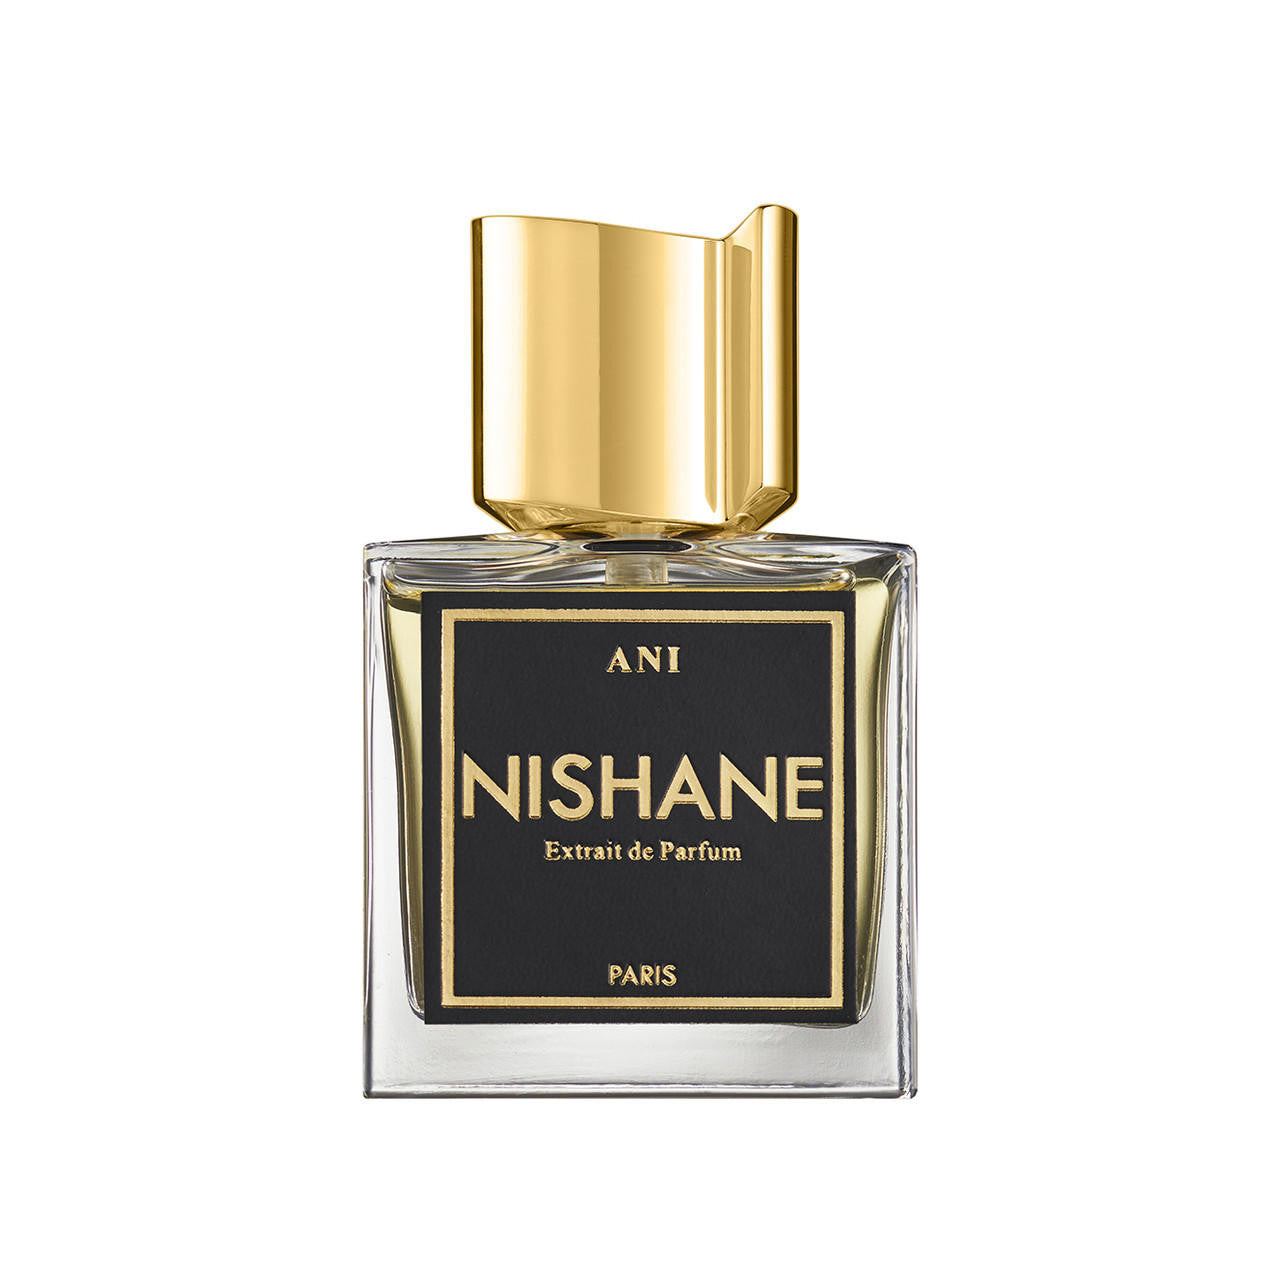  Nishane ANI Extrait de Parfum 